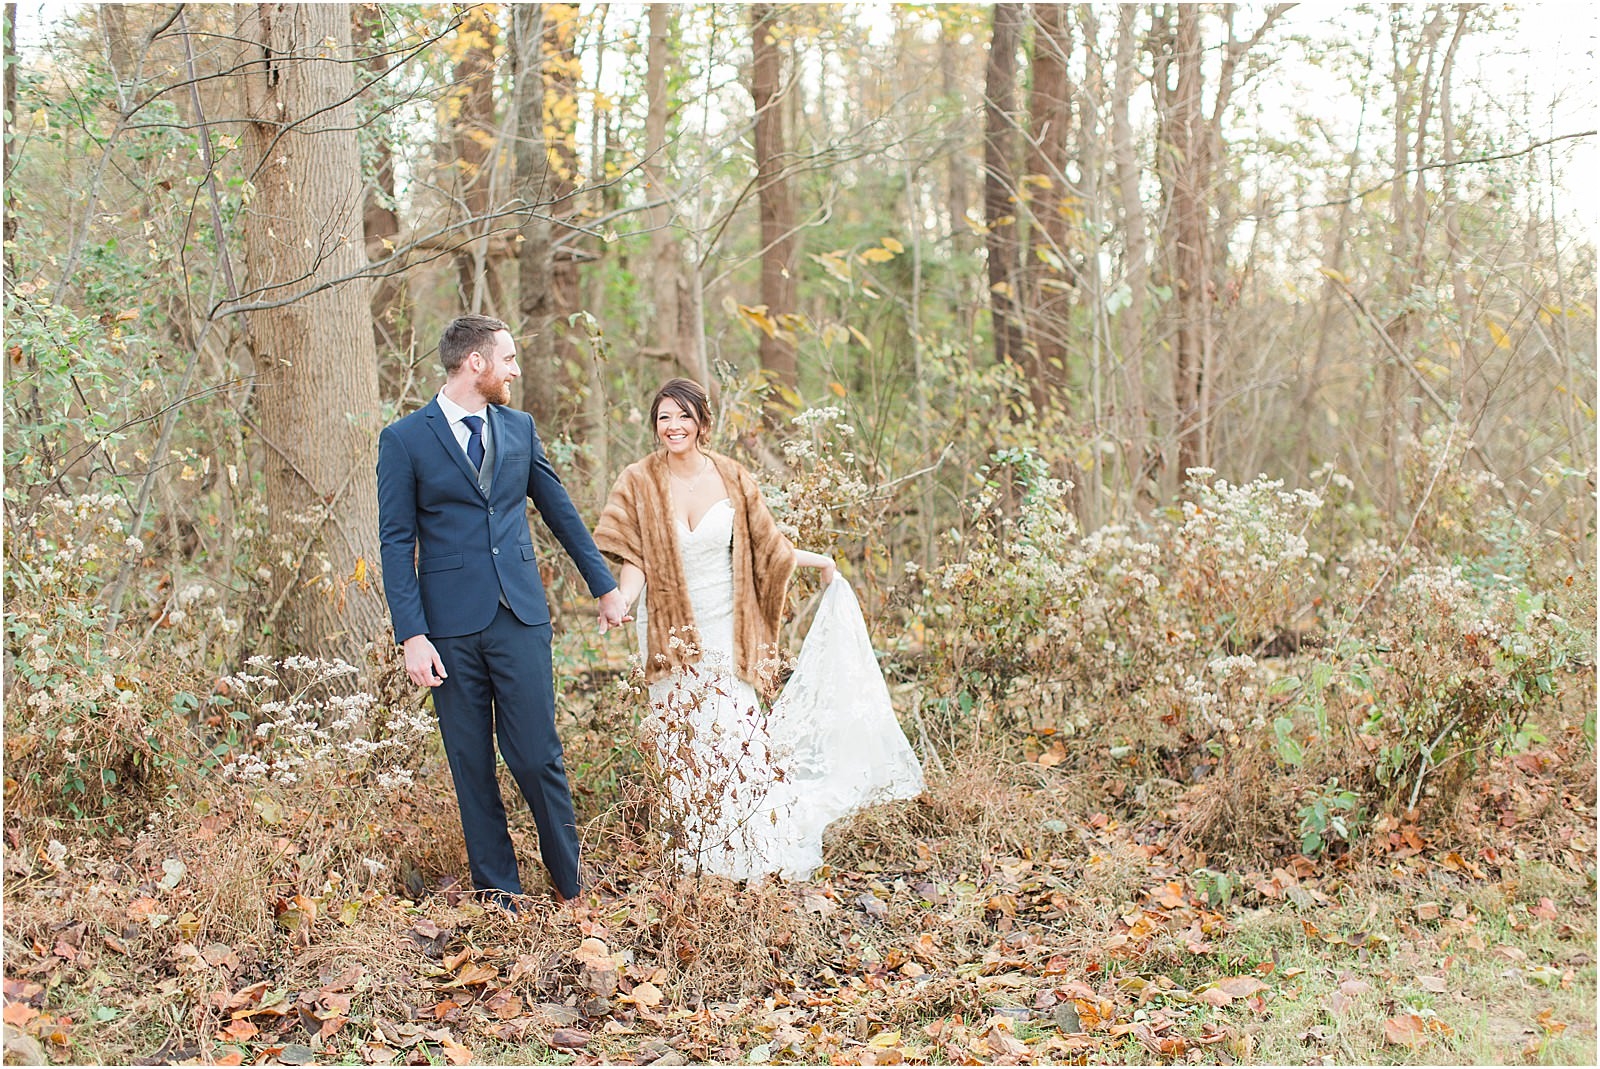 Walker and Alyssa's intimate fall wedding in Southern Indiana. | Wedding Photography | The Corner House Wedding | Southern Indiana Wedding | #fallwedding #intimatewedding | 082.jpg